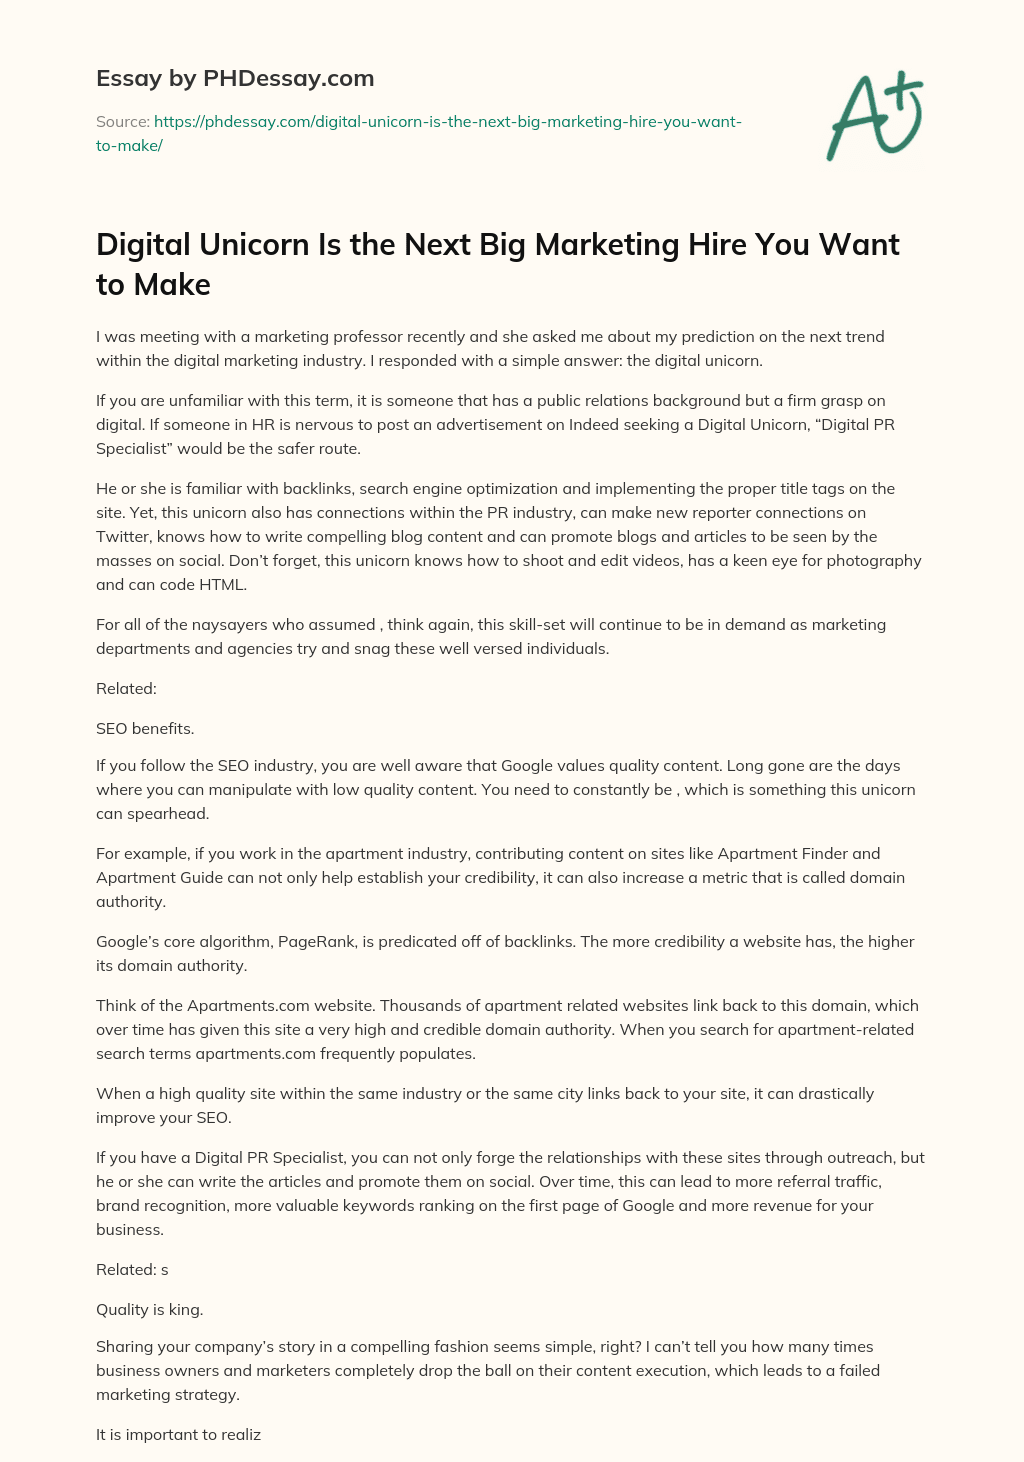 Digital Unicorn Is the Next Big Marketing Hire You Want to Make essay